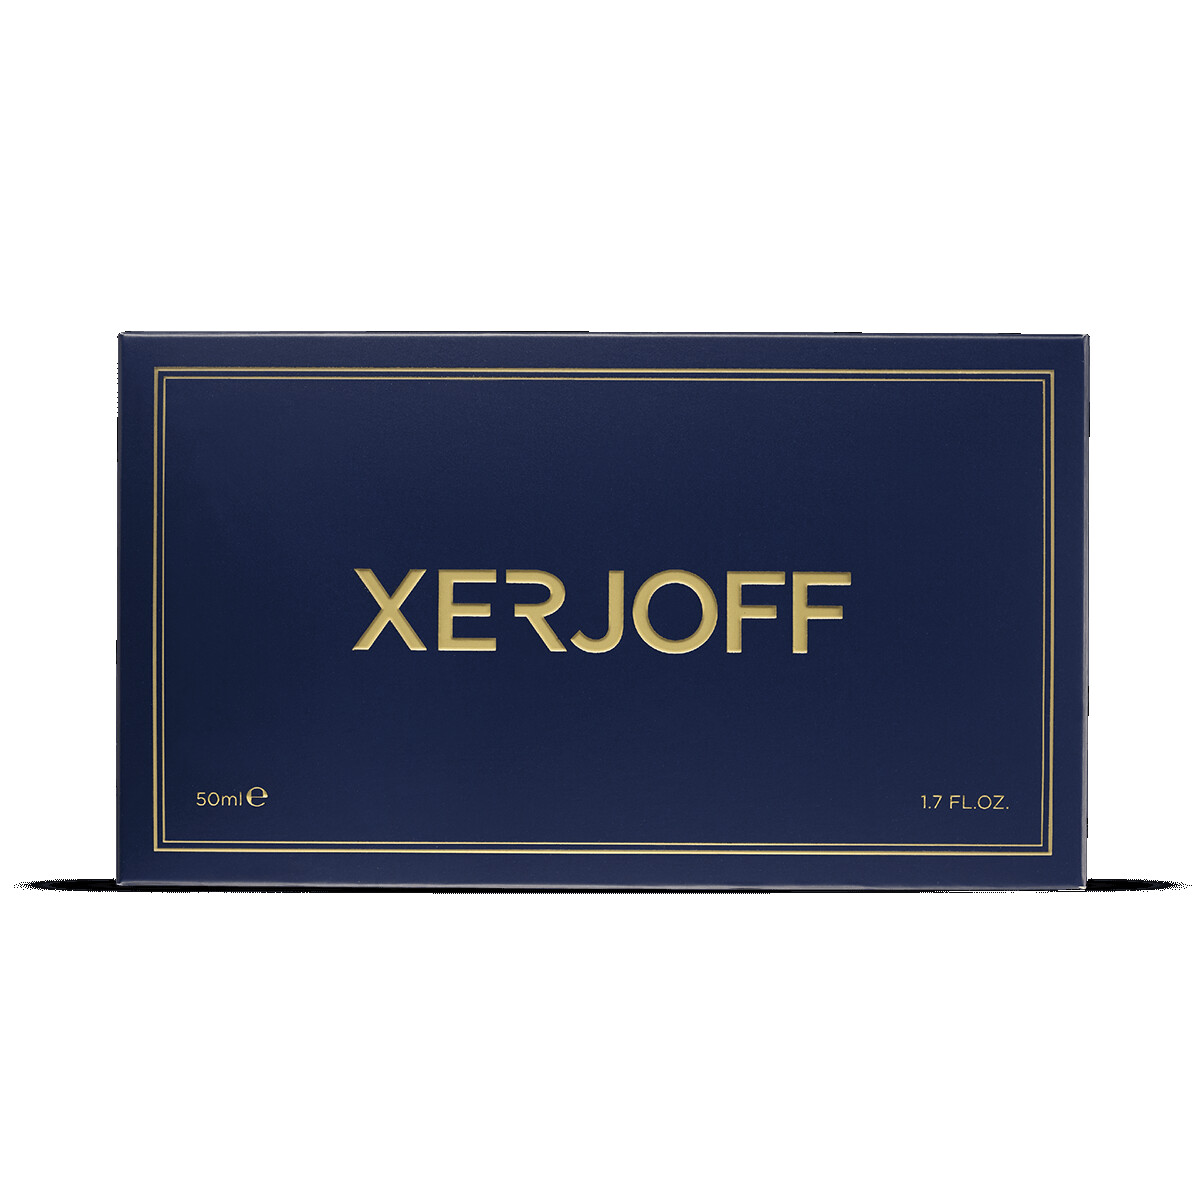 Xerjoff JOIN THE CLUB More than Words Eau de Parfum 50ml